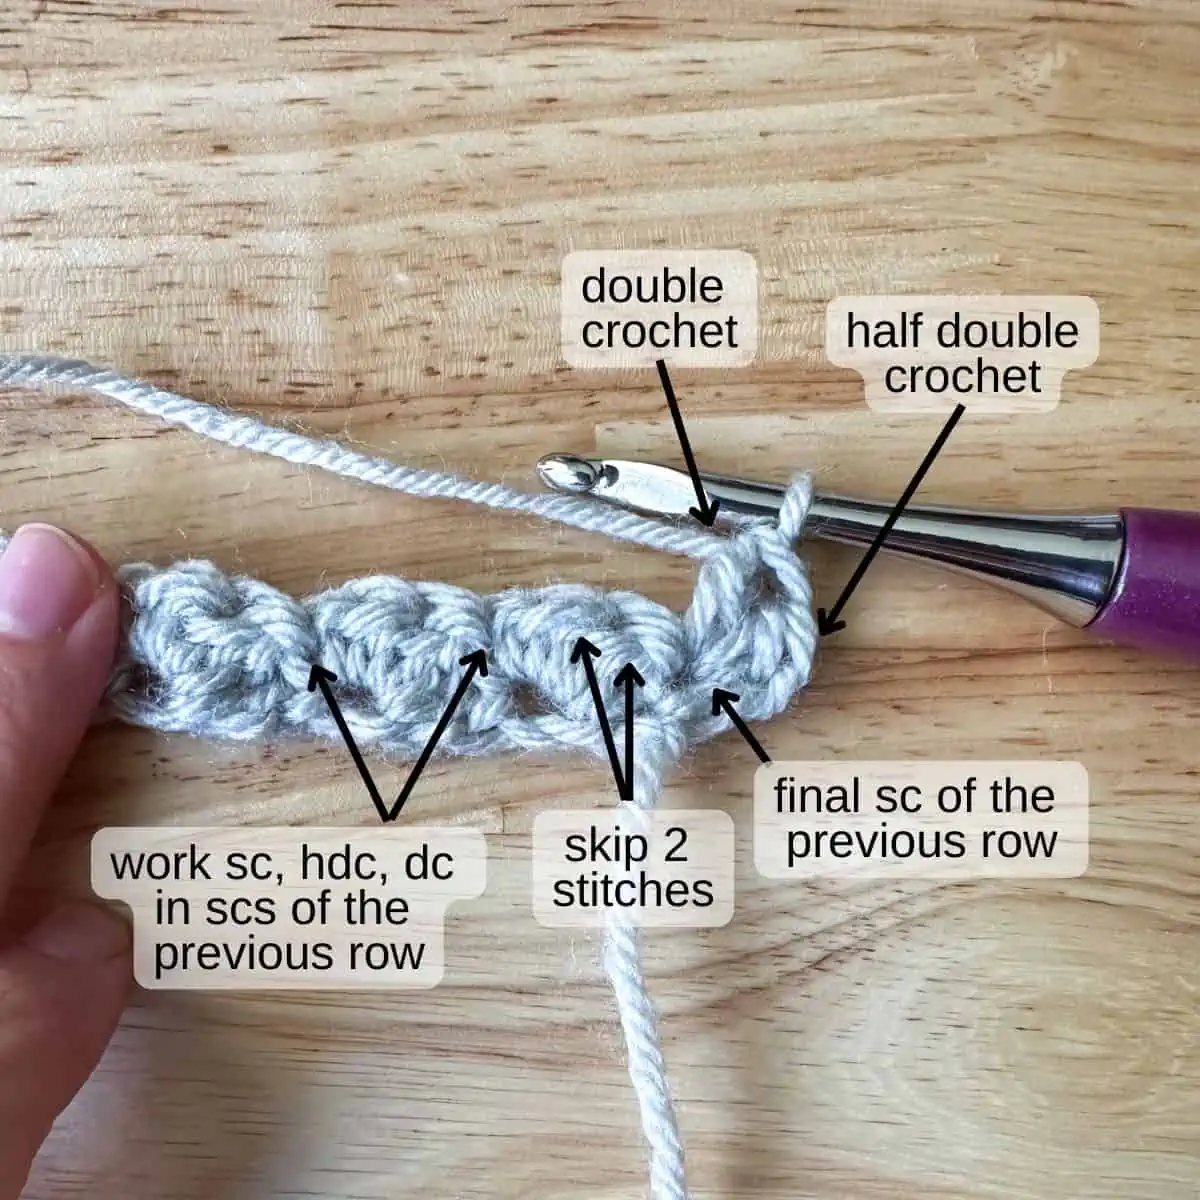 How to Crochet the Sedge Stitch - Free Tutorial